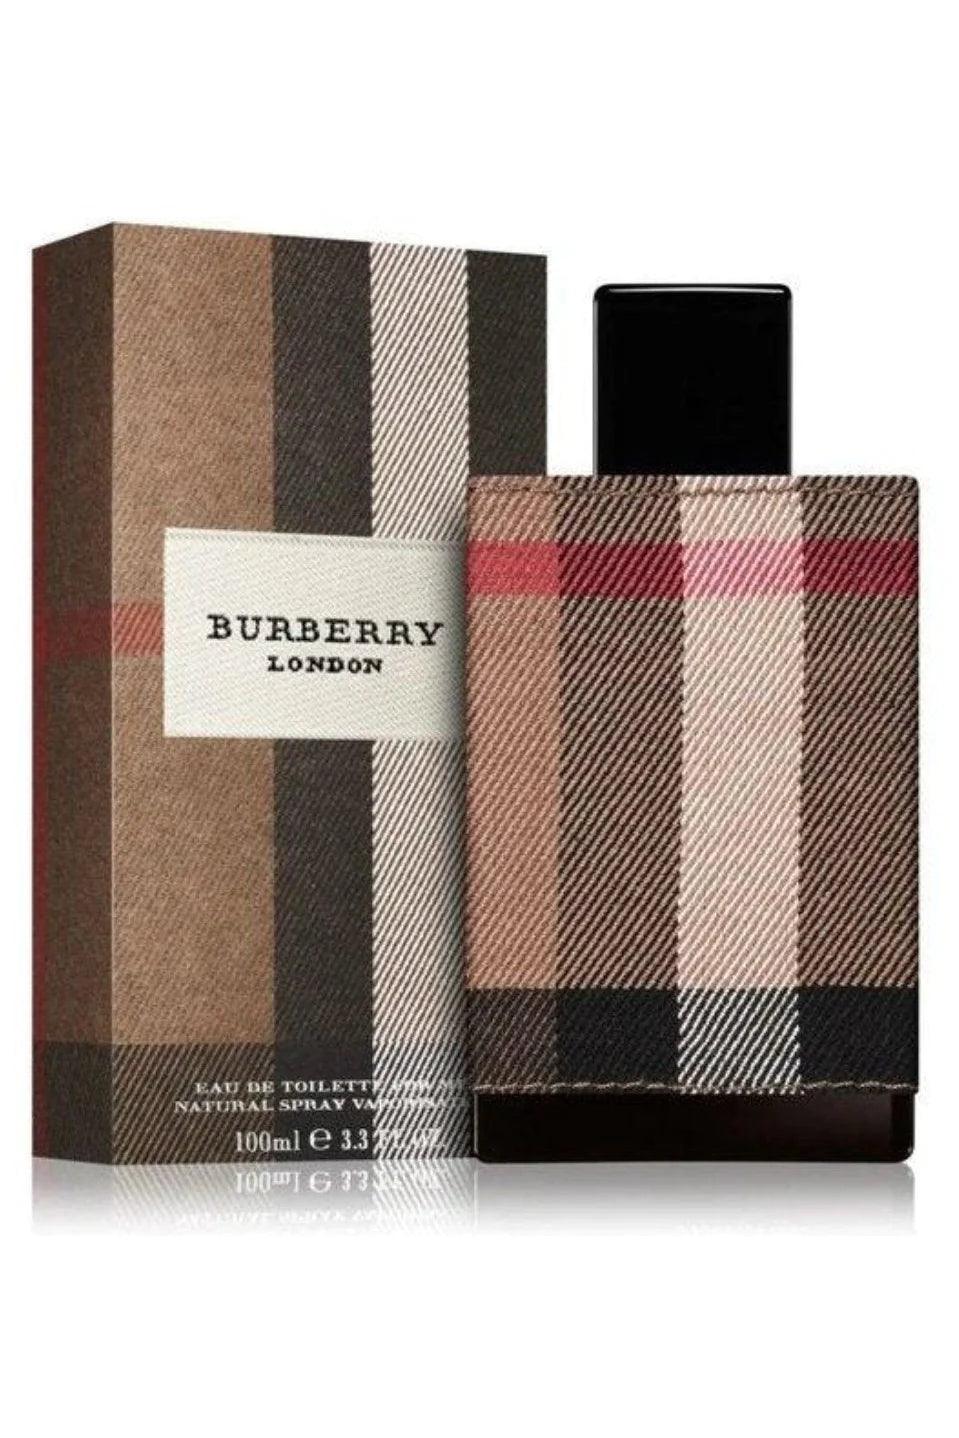 Burberry - London Men EDT - 100ml - Cosmetic Holic